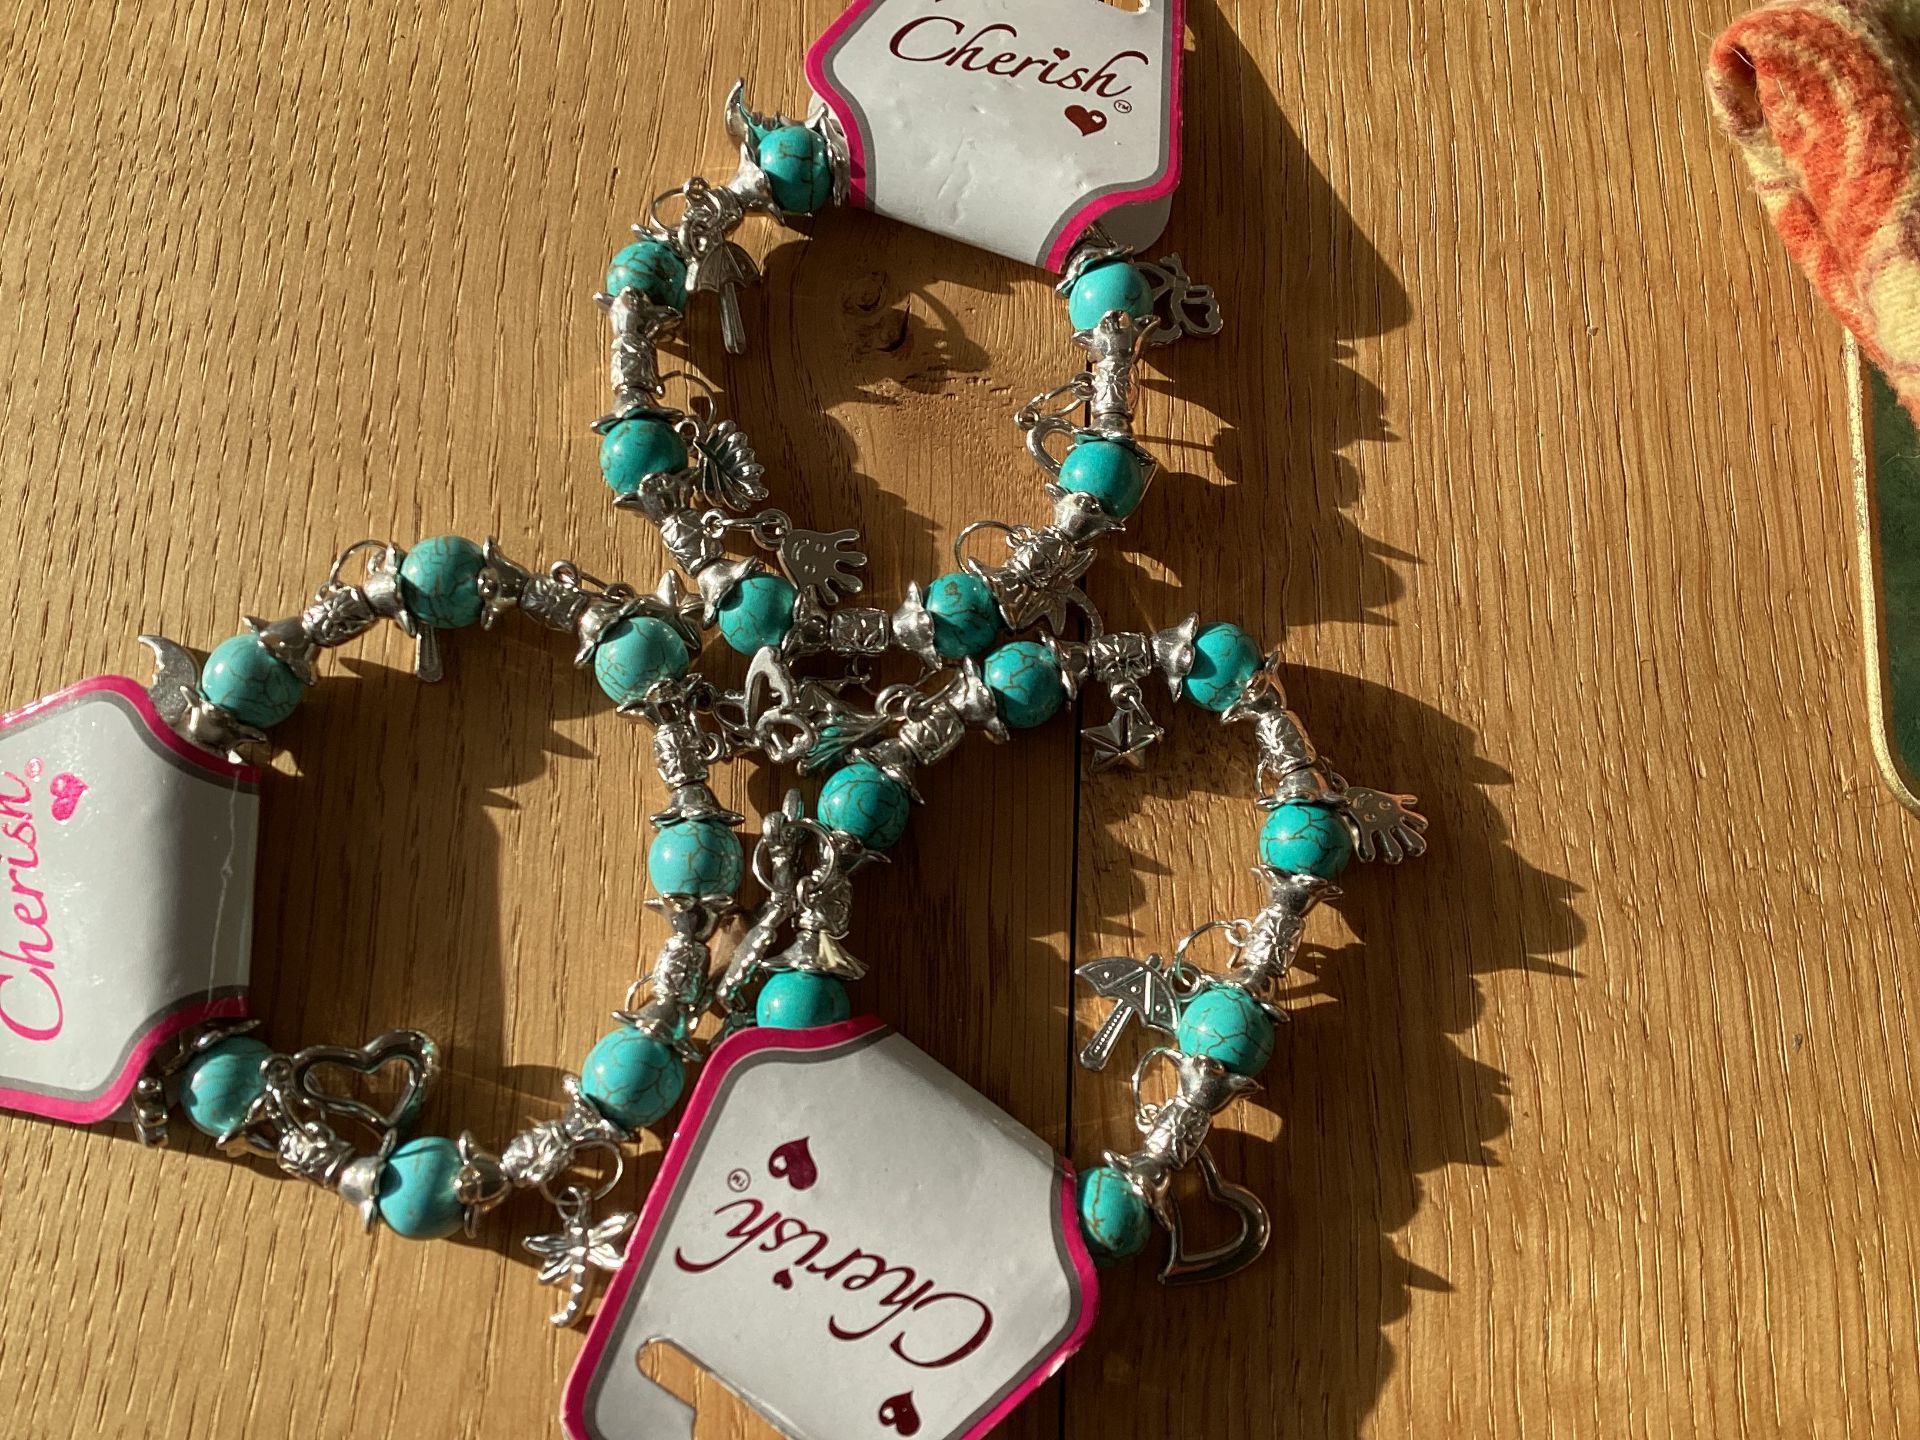 224 Aqua coloured Pandora styled Bracelets by Cherish with assortment of charms *NO VAT* - Image 3 of 3